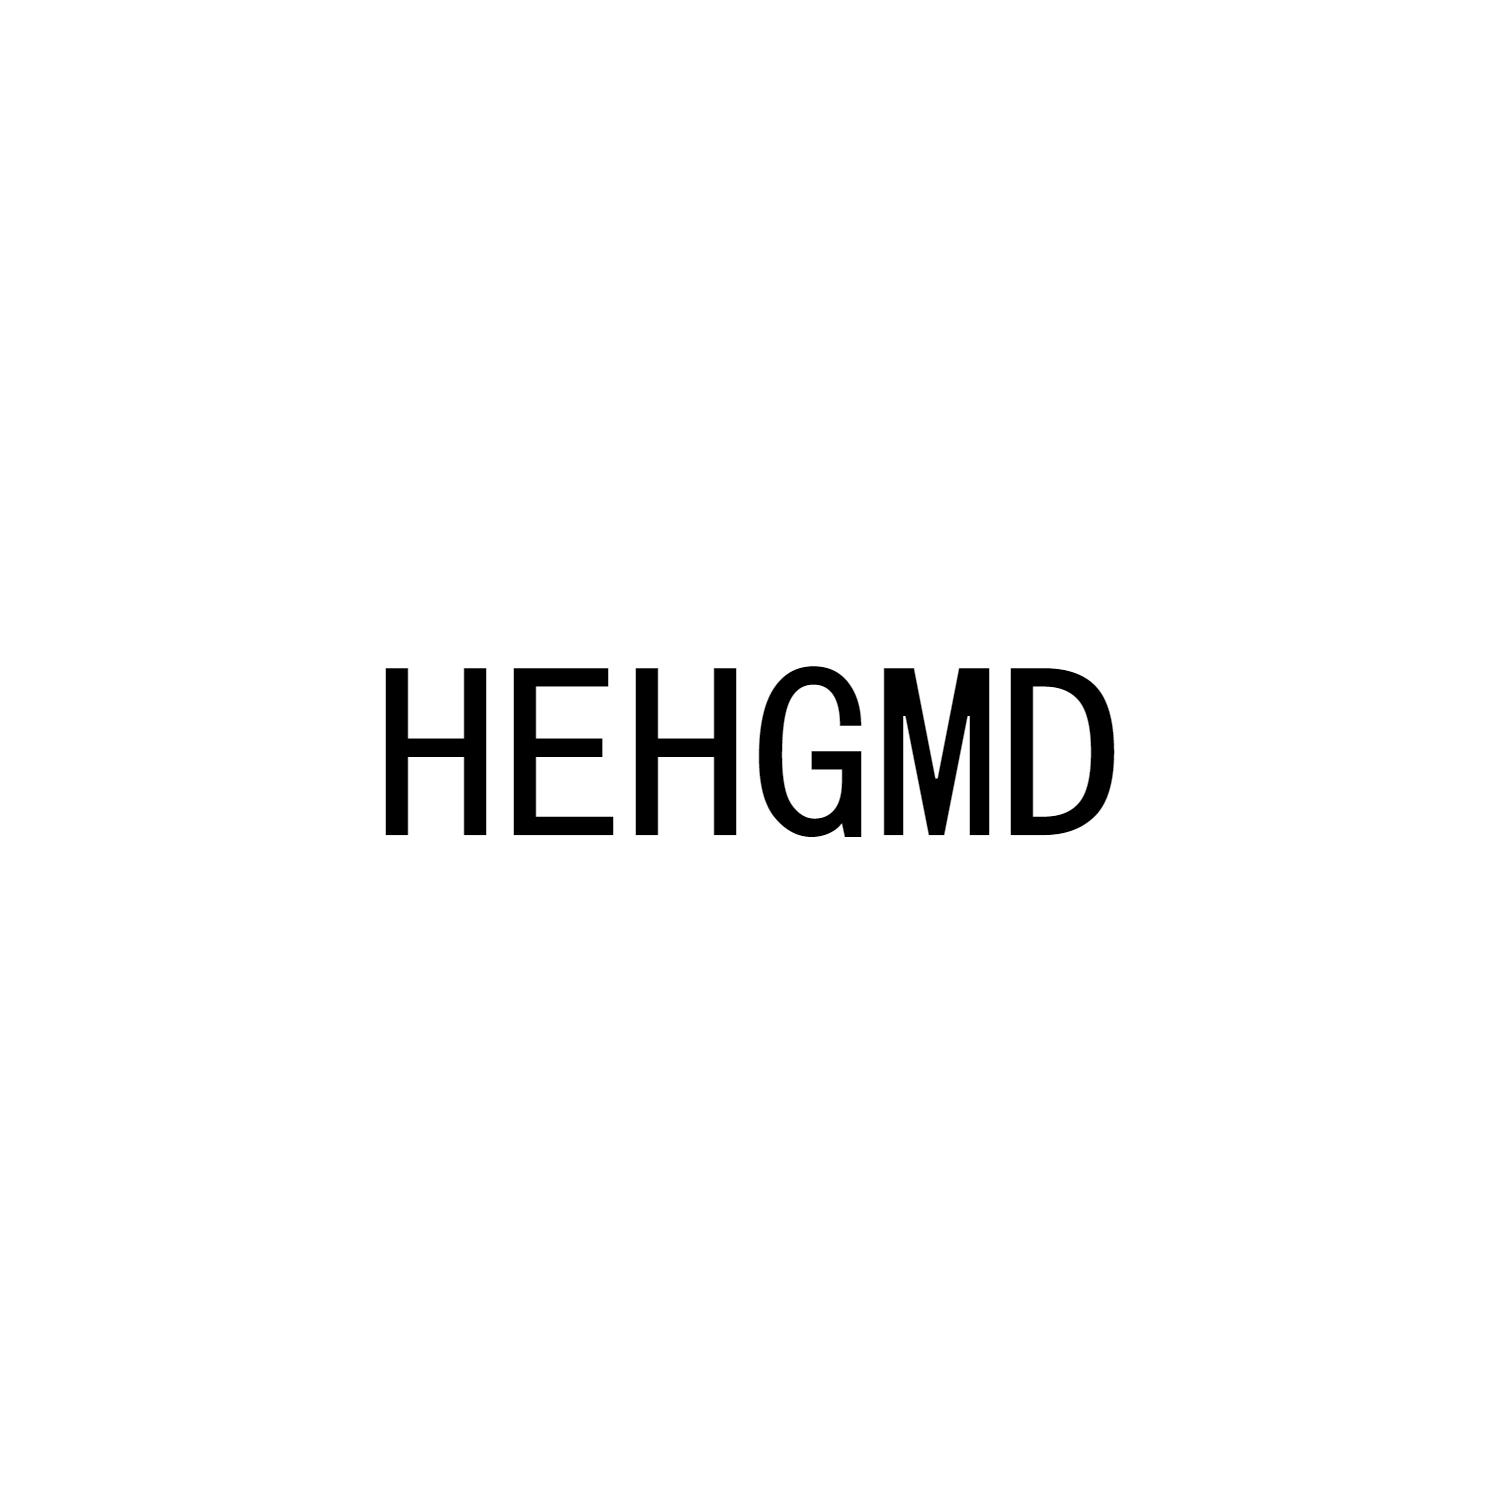 HEHGMD